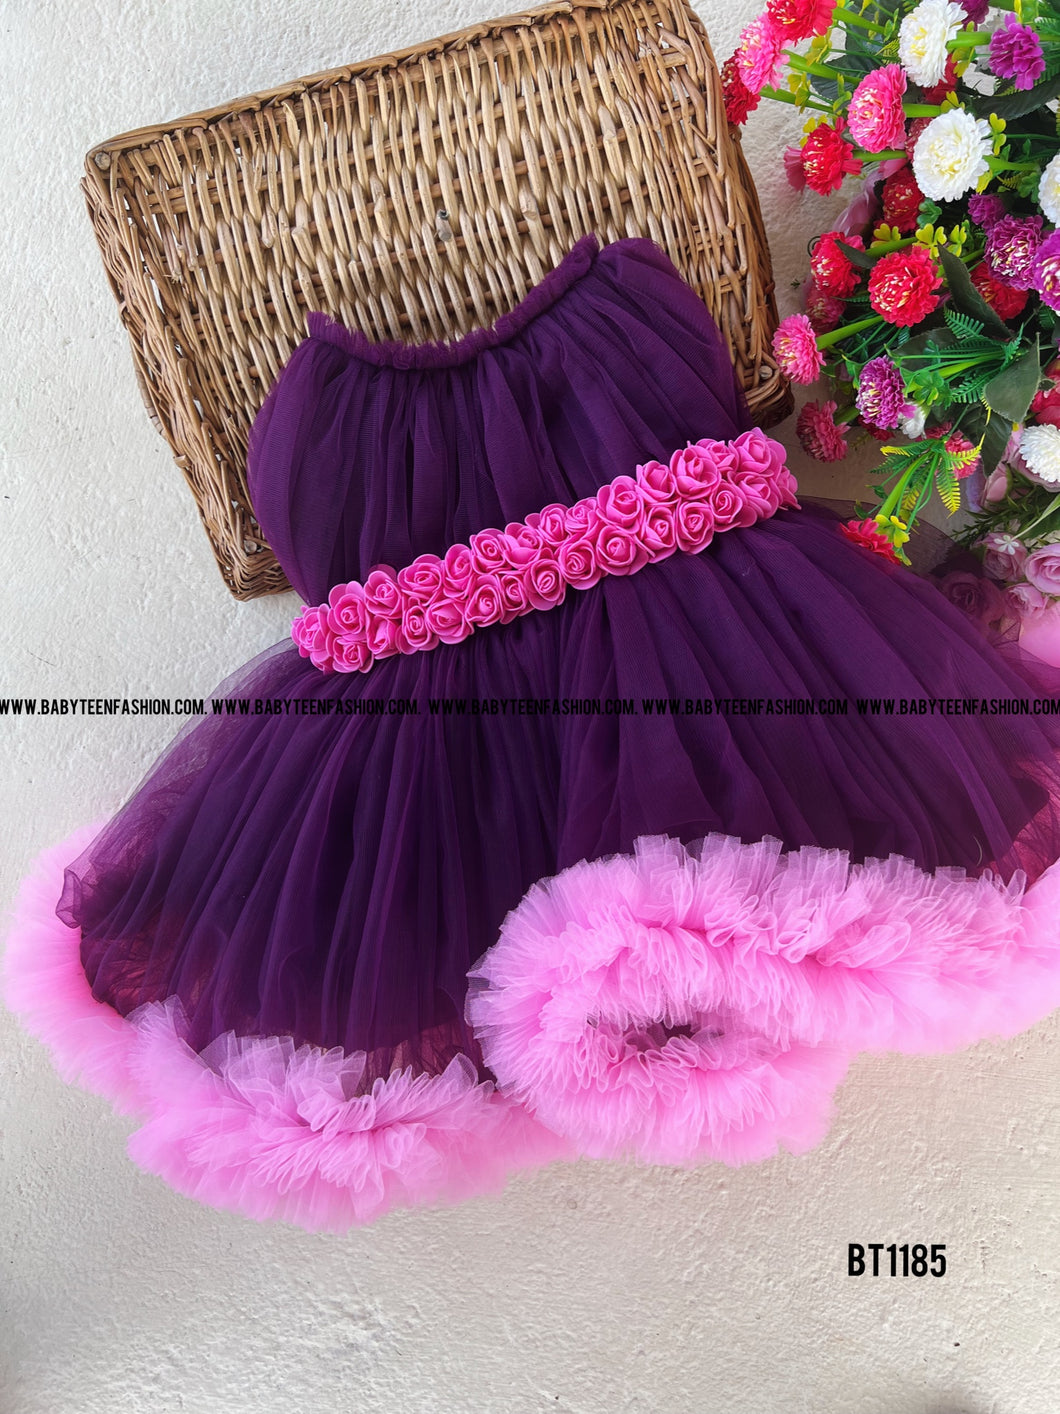 BT1185 Flower Theme Birthday Dress